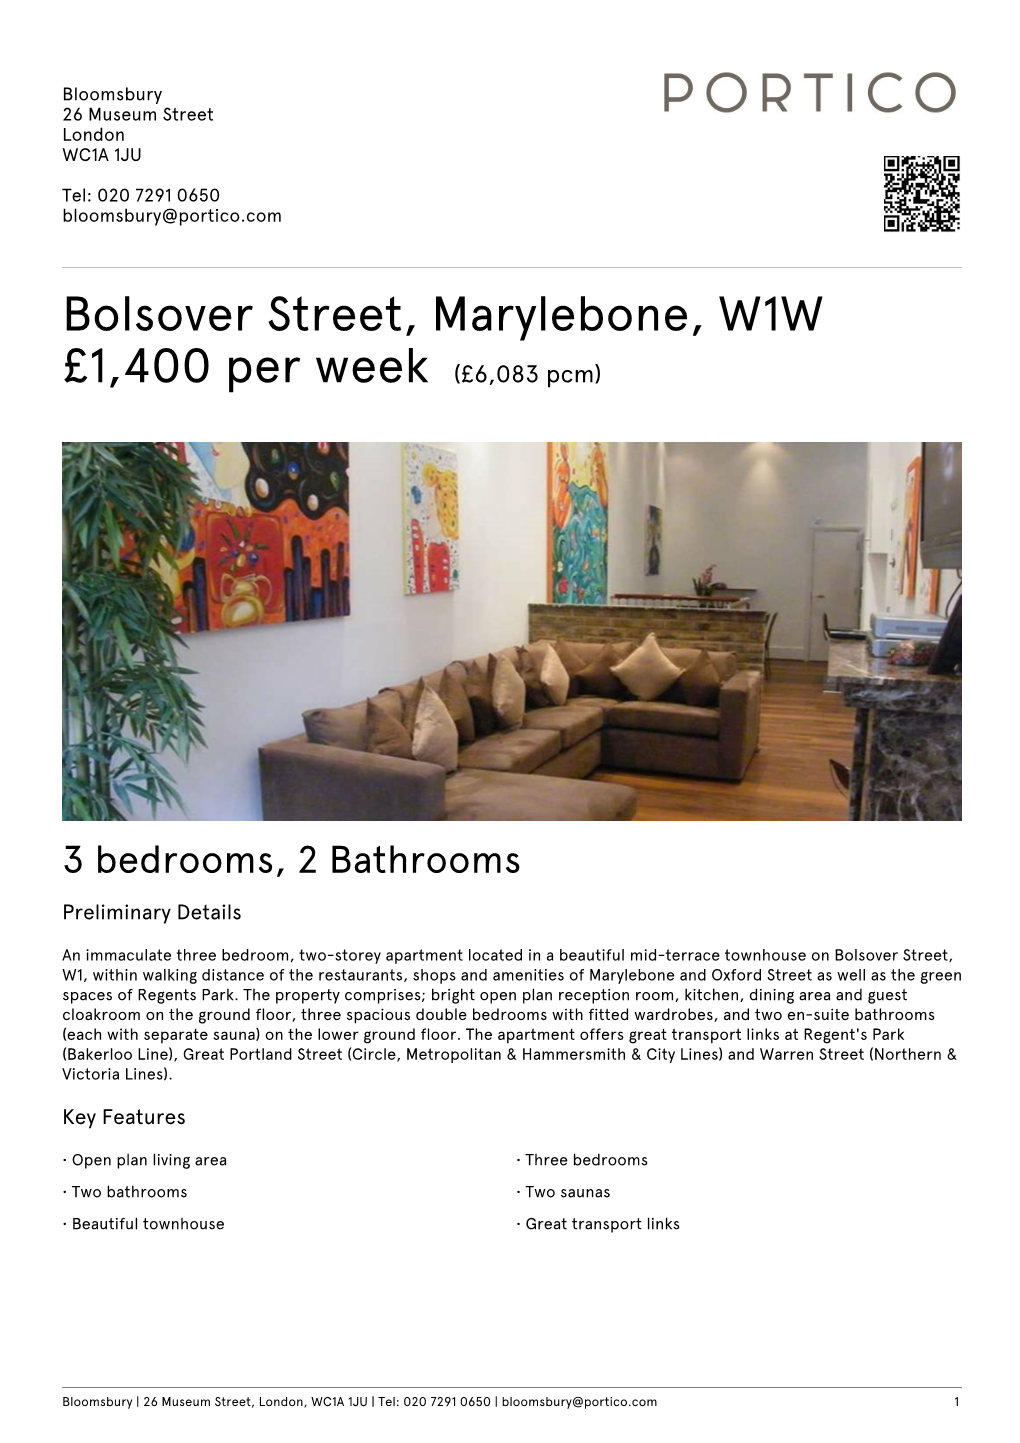 Bolsover Street, Marylebone, W1W £1400 Per Week